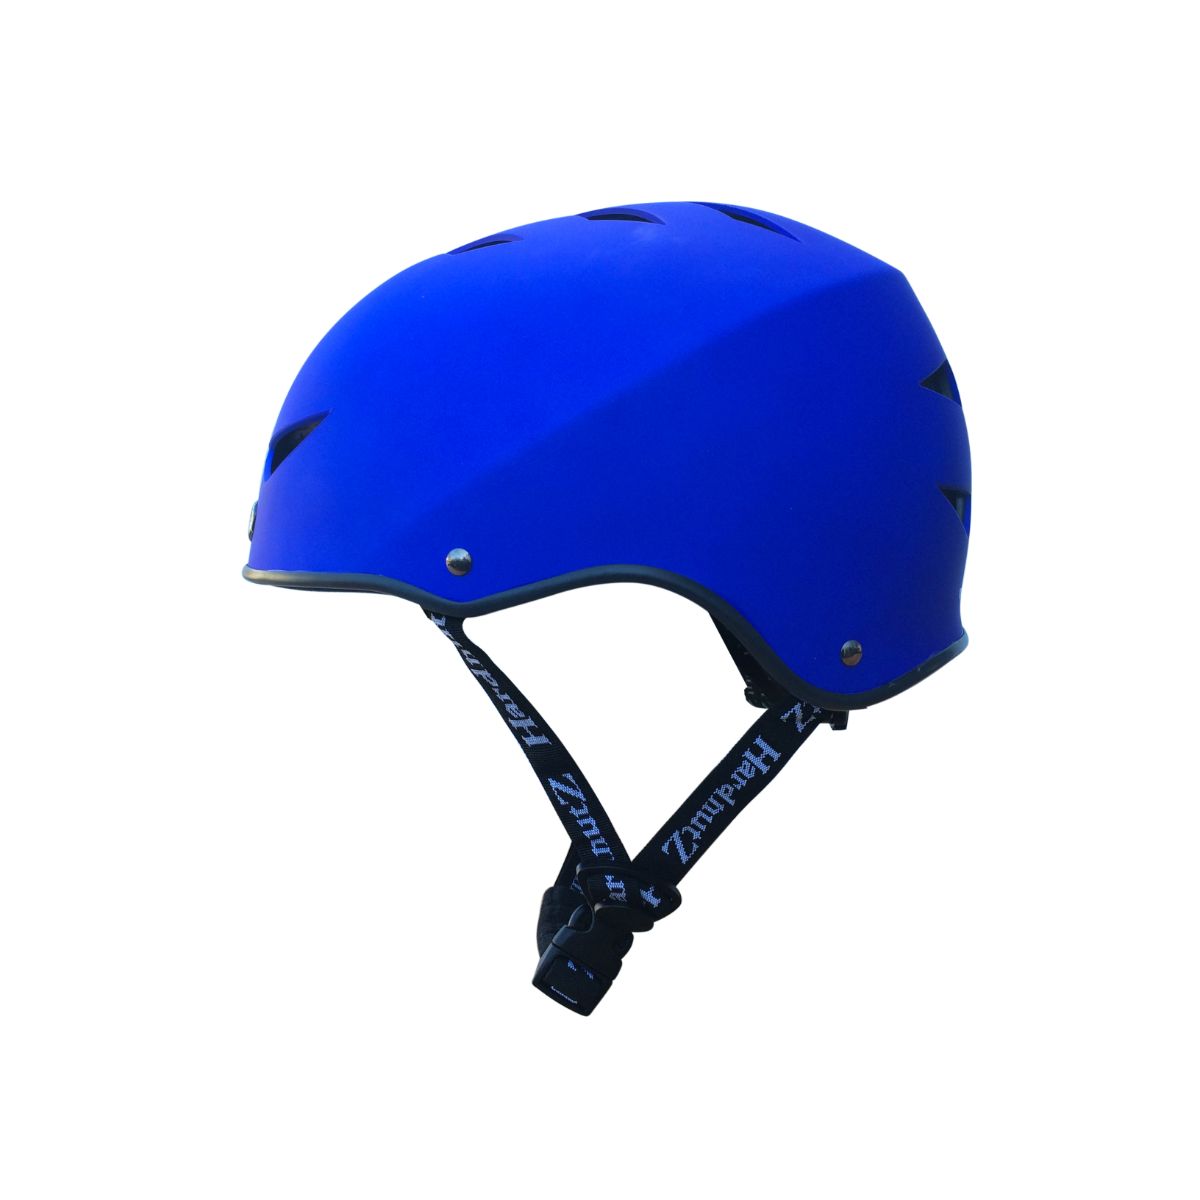 HardnutZ Rubber Street Helmet